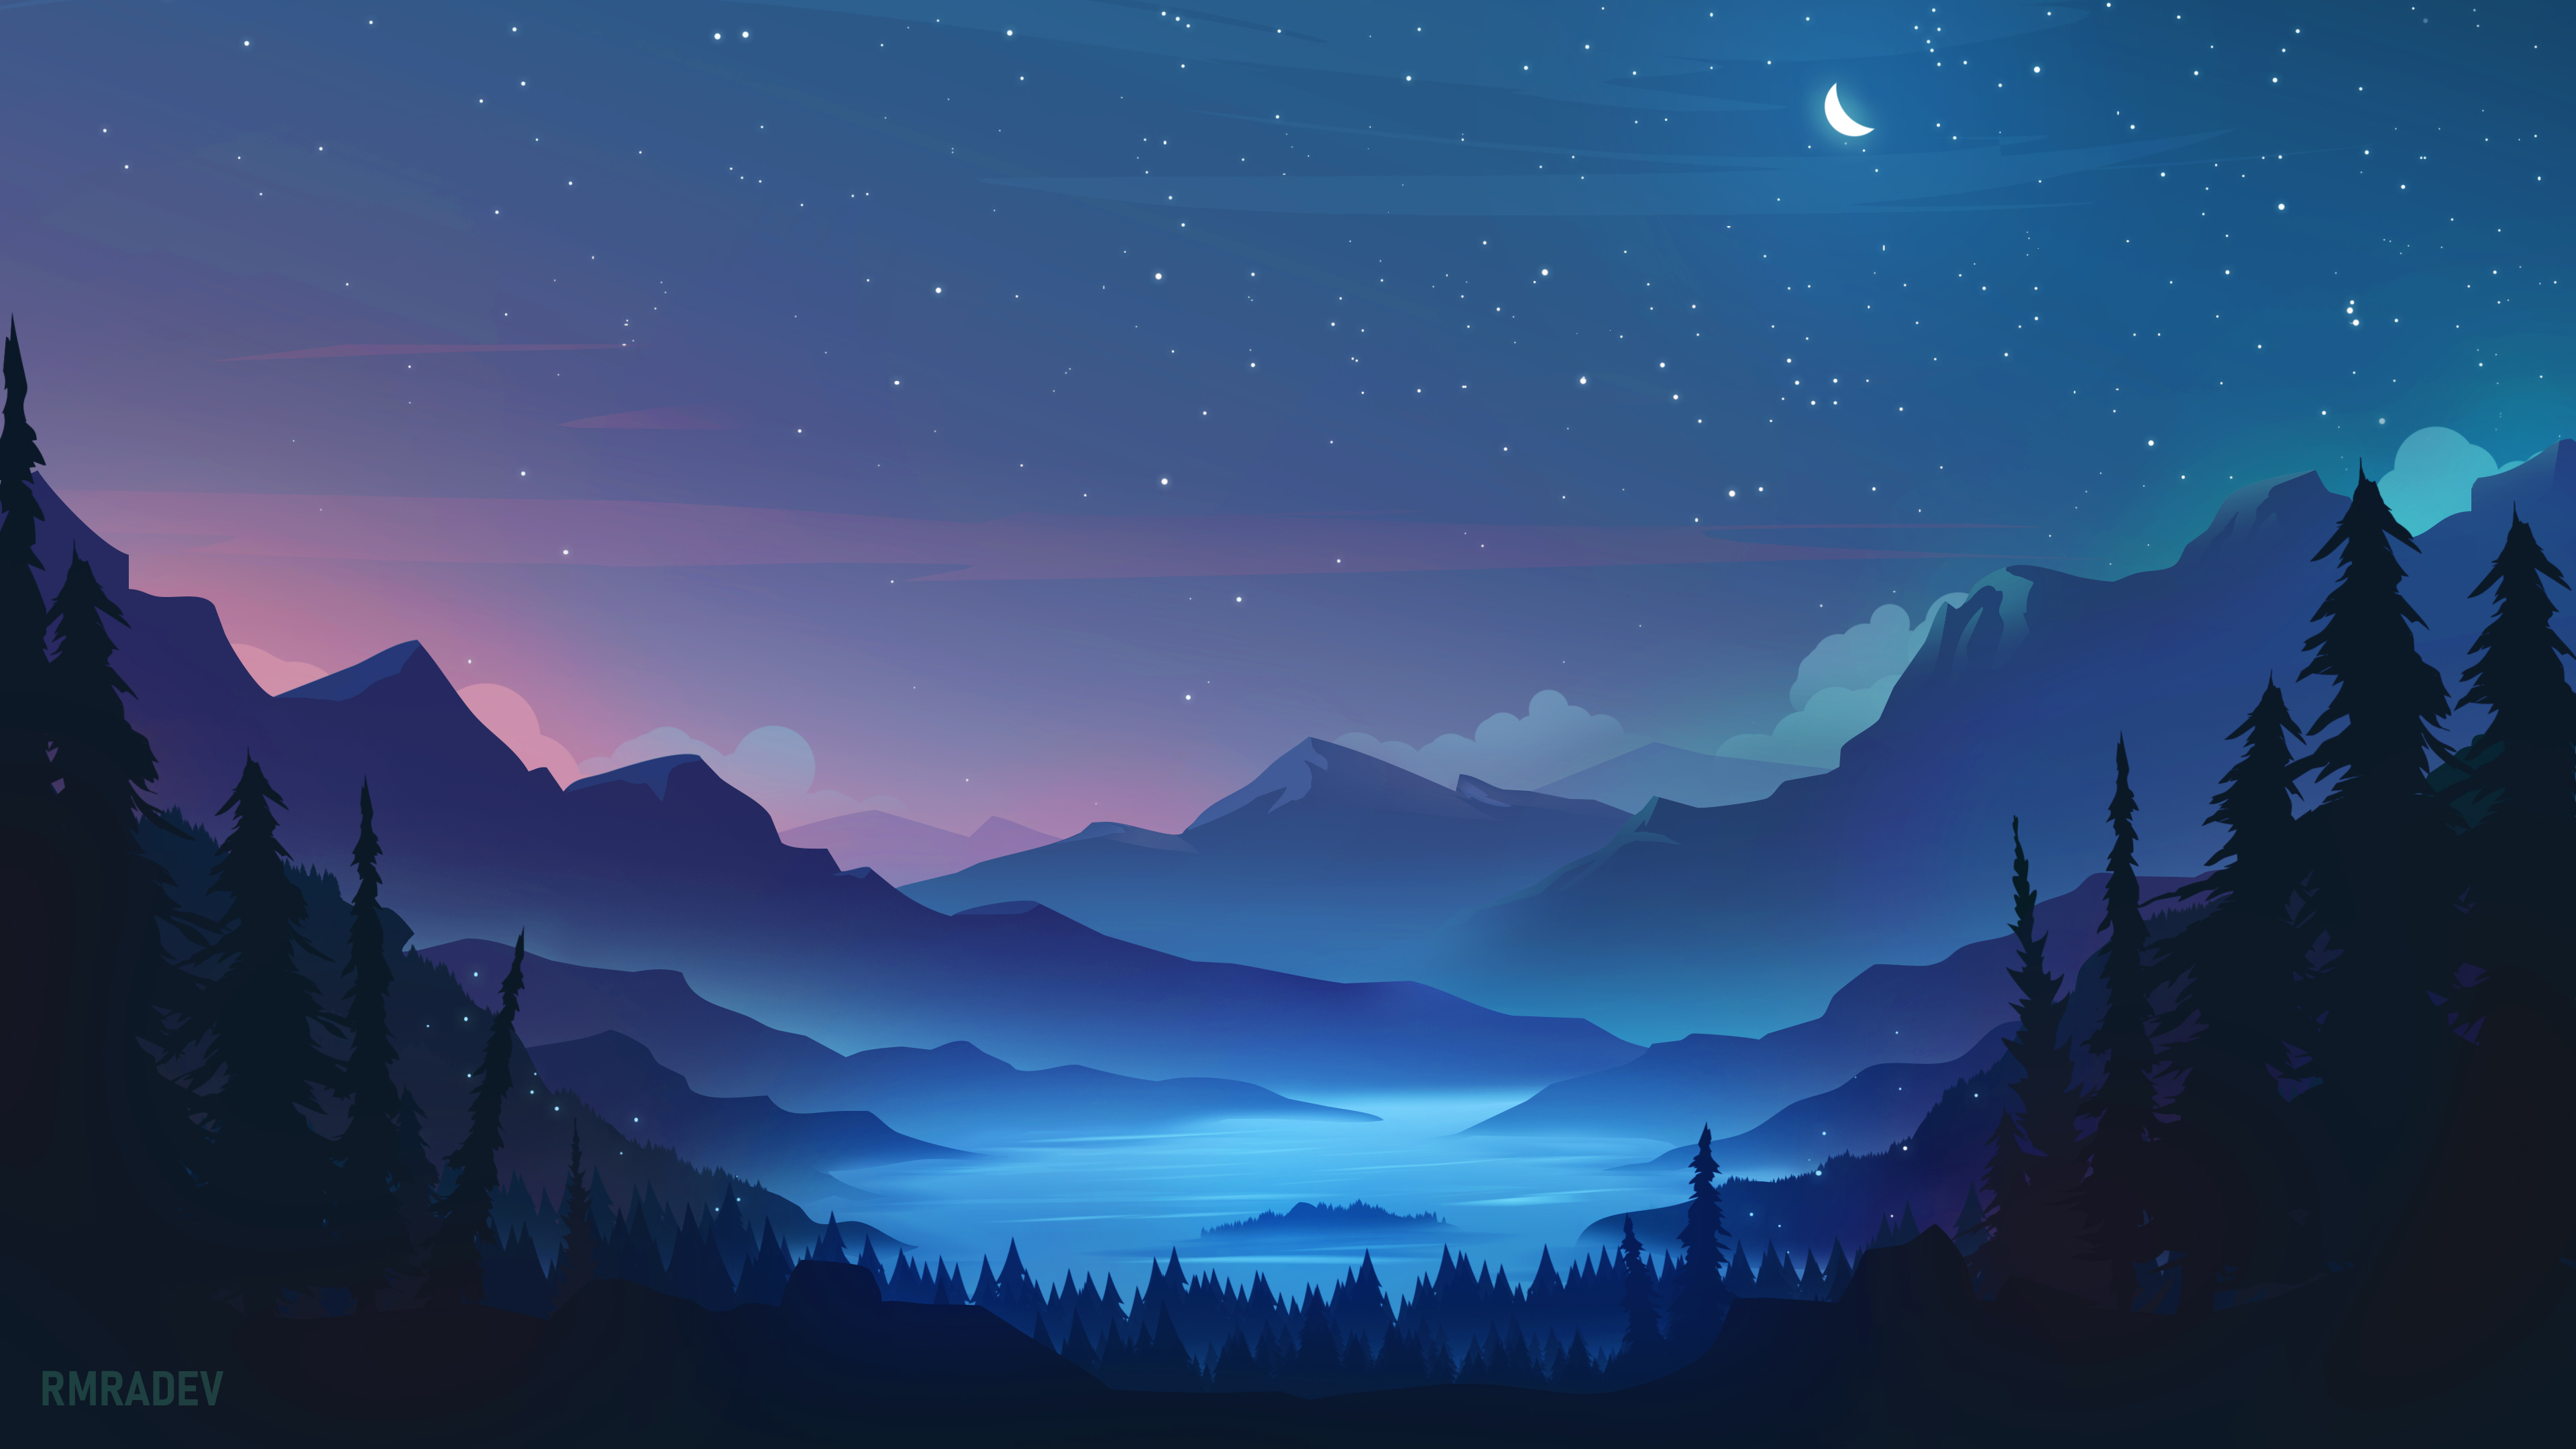 General 3840x2160 rmRadev artwork illustration landscape nature mountains night nightscape lake stars starry night crescent moon digital art